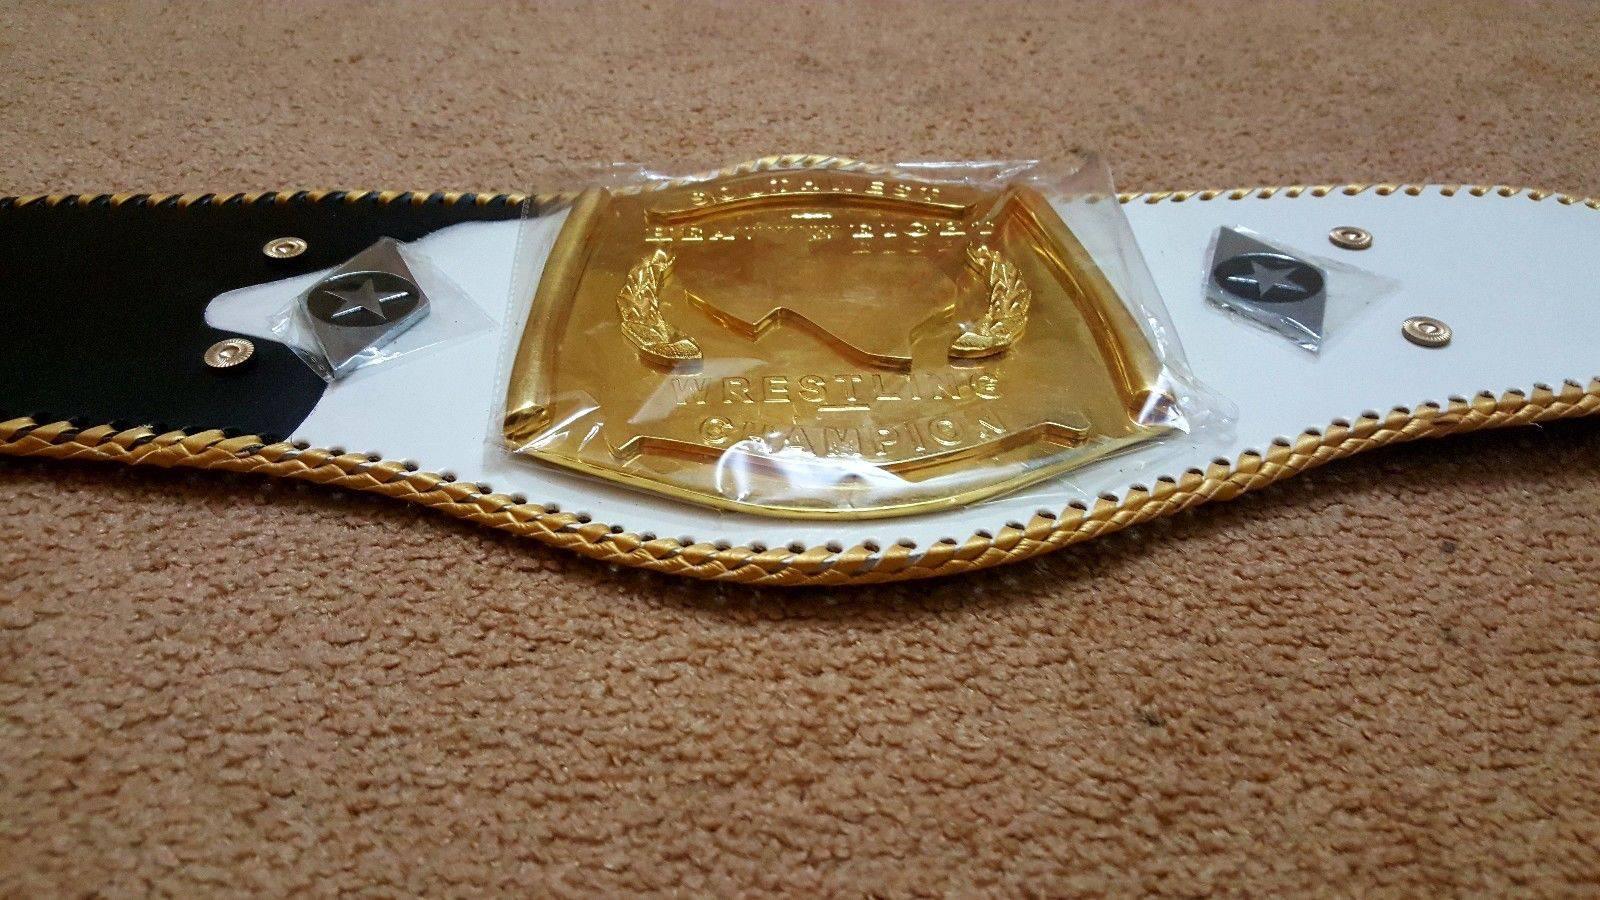 SOUTHWEST HEAVYWEIGHT Championship Belt - Zees Belts